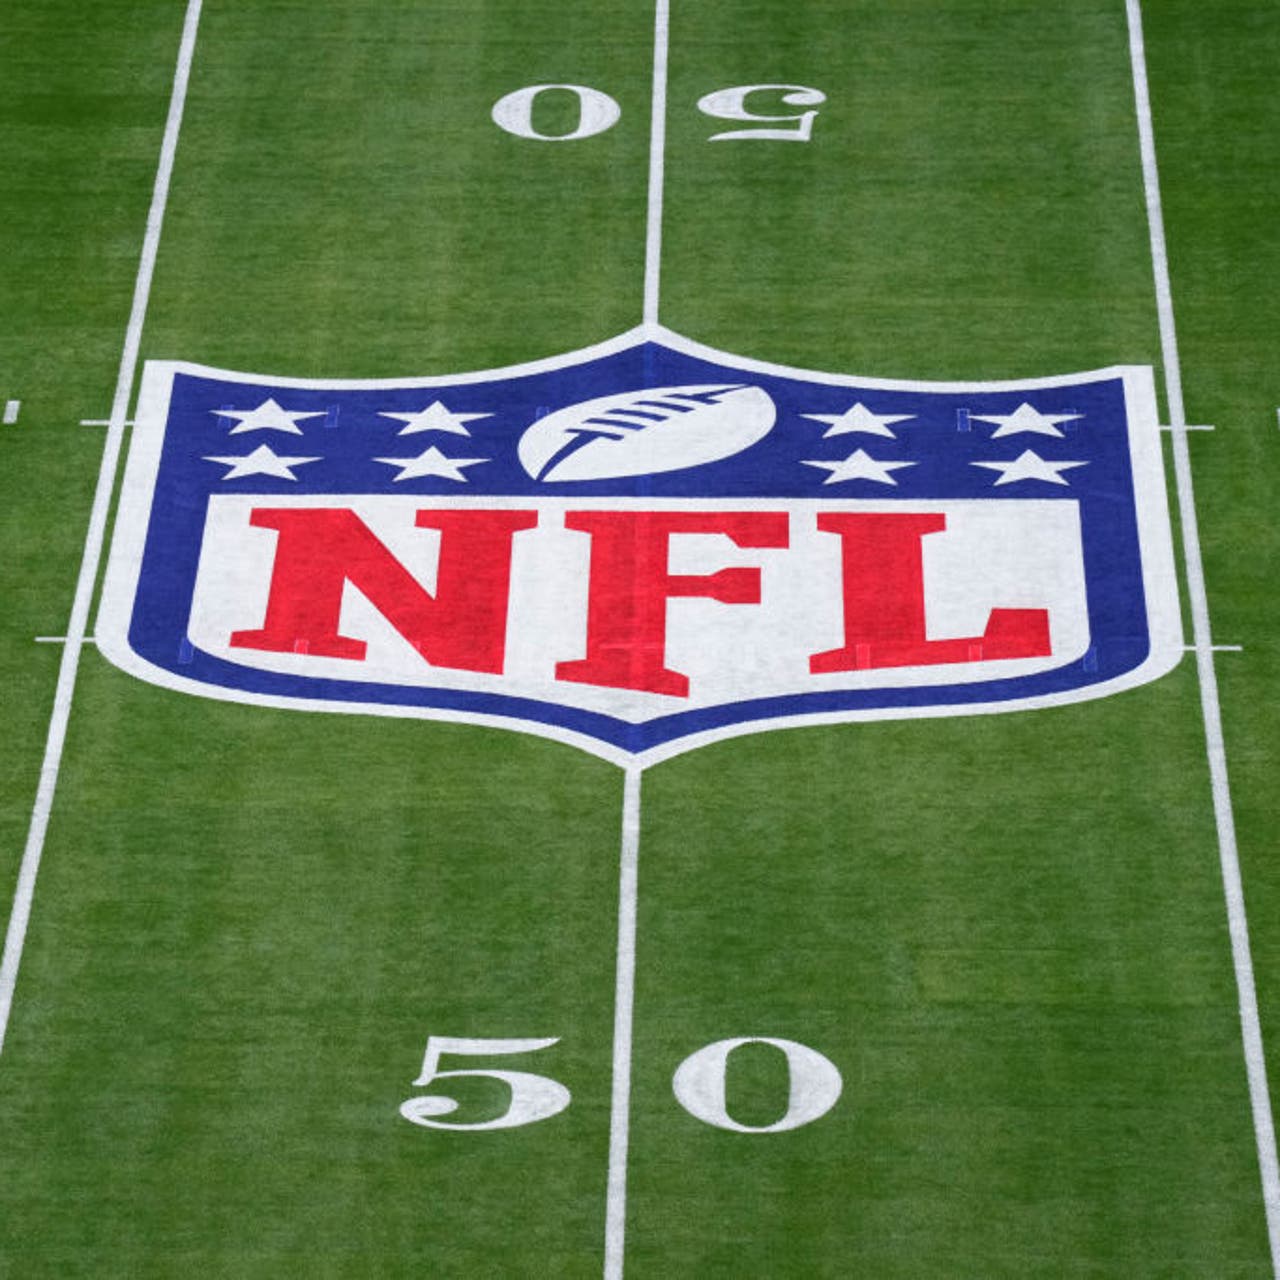 2023 NFL Preseason - NFL Network